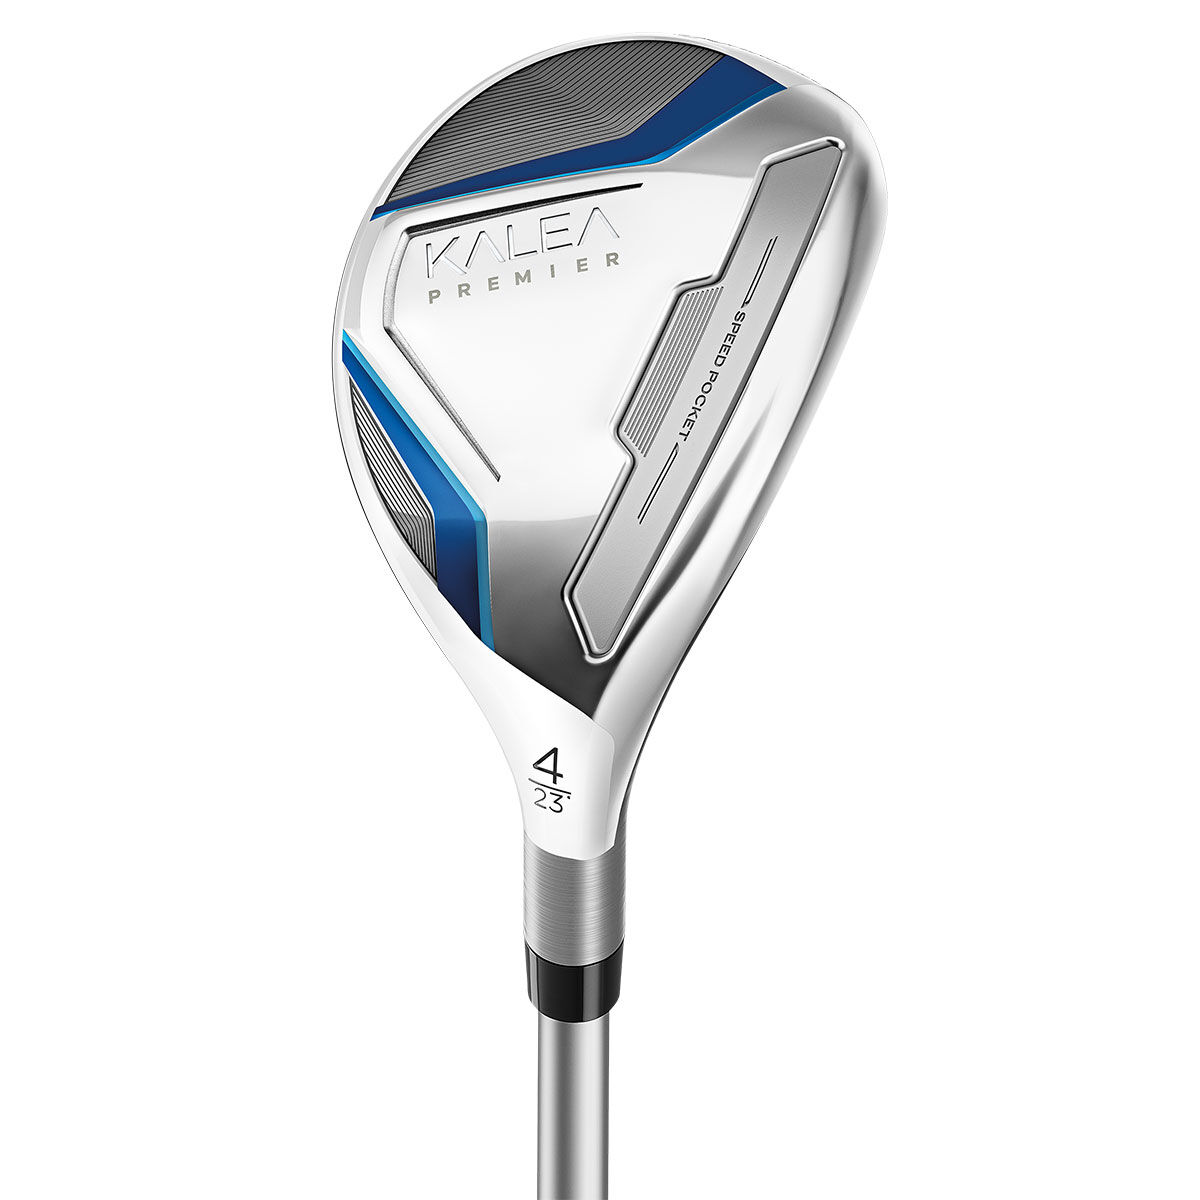 TaylorMade Silver and Blue Women’s Kalea Premier Right Hand Golf Hybrid, Size: 31deg | American Golf